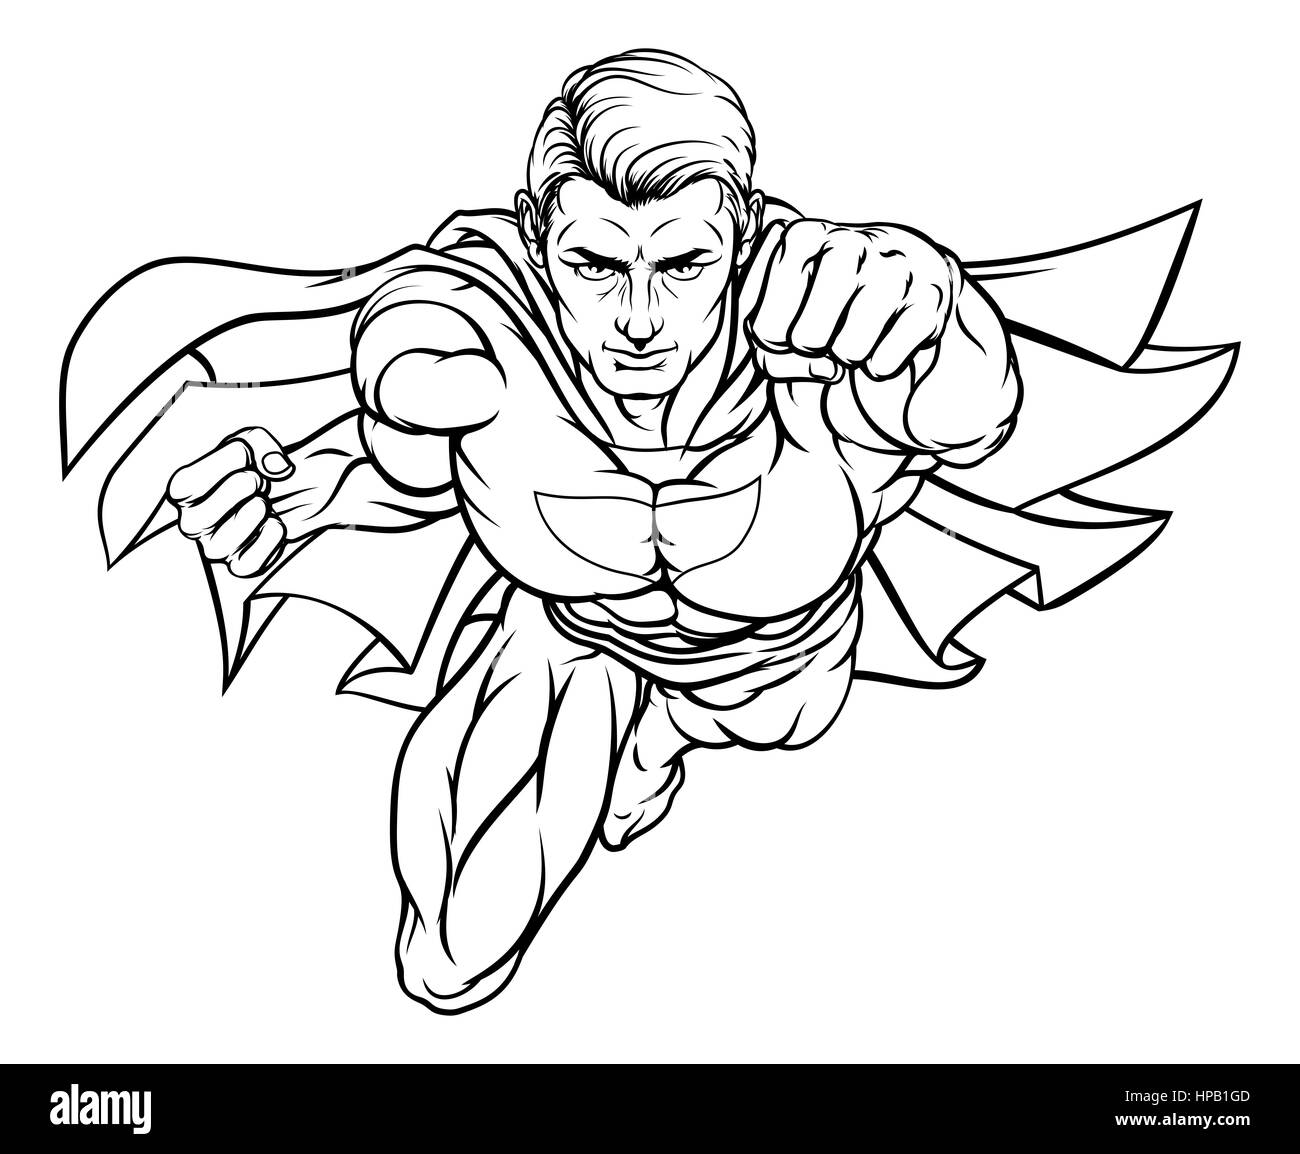 Superman cartoon Black and White Stock Photos & Images - Alamy